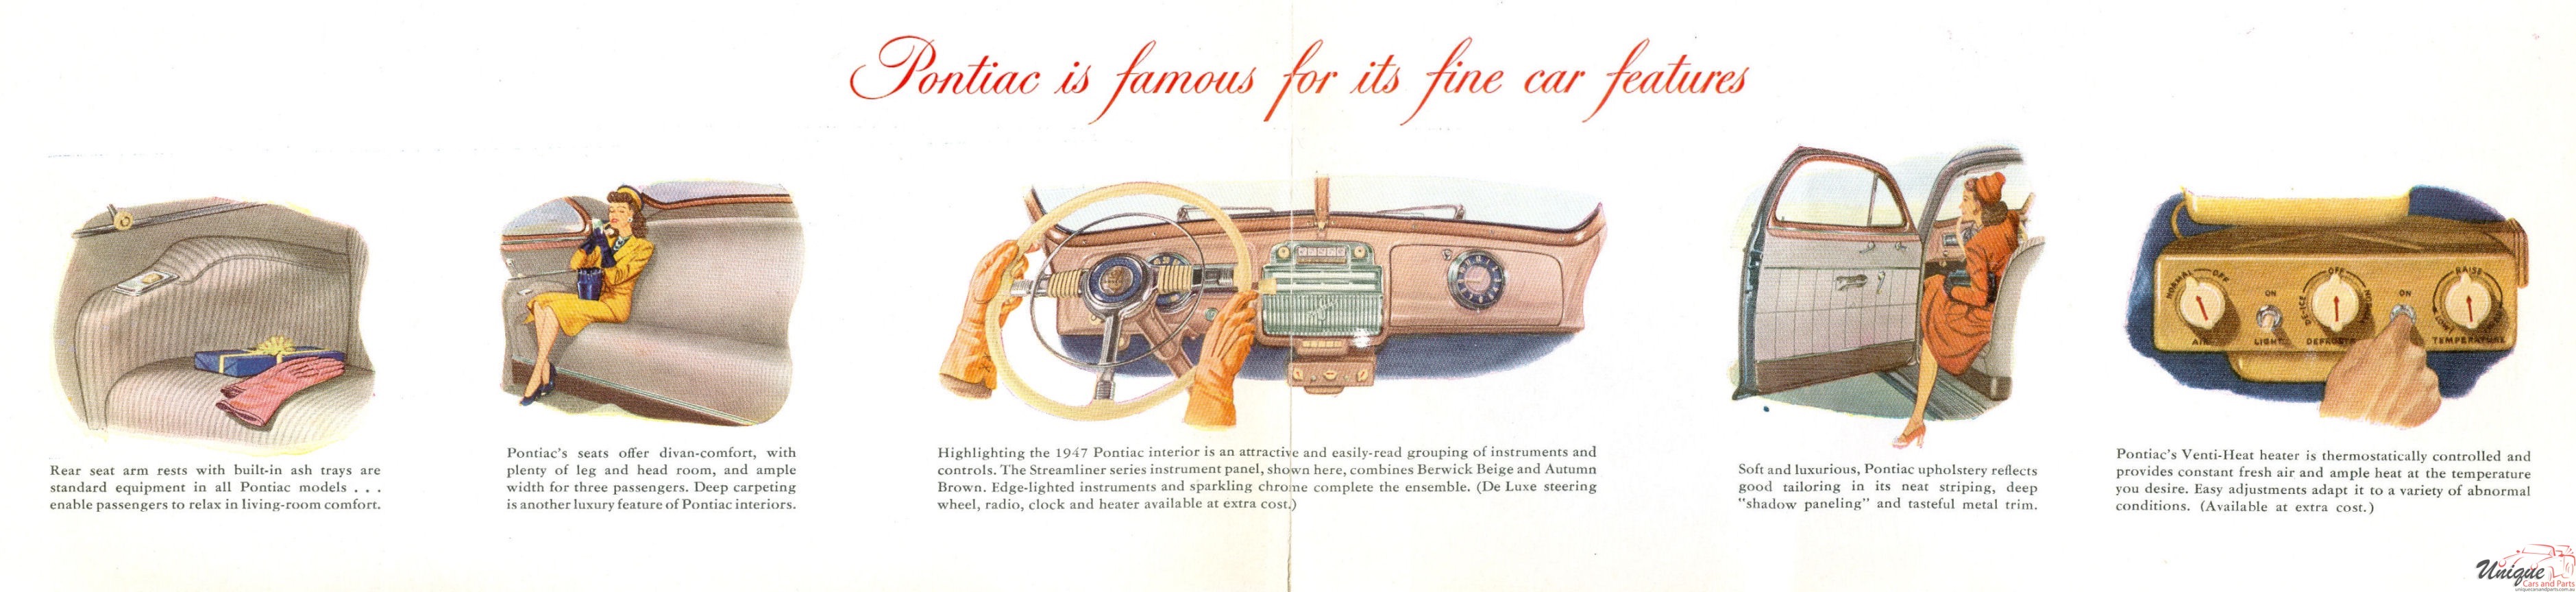 1947 Pontiac Brochure Page 3